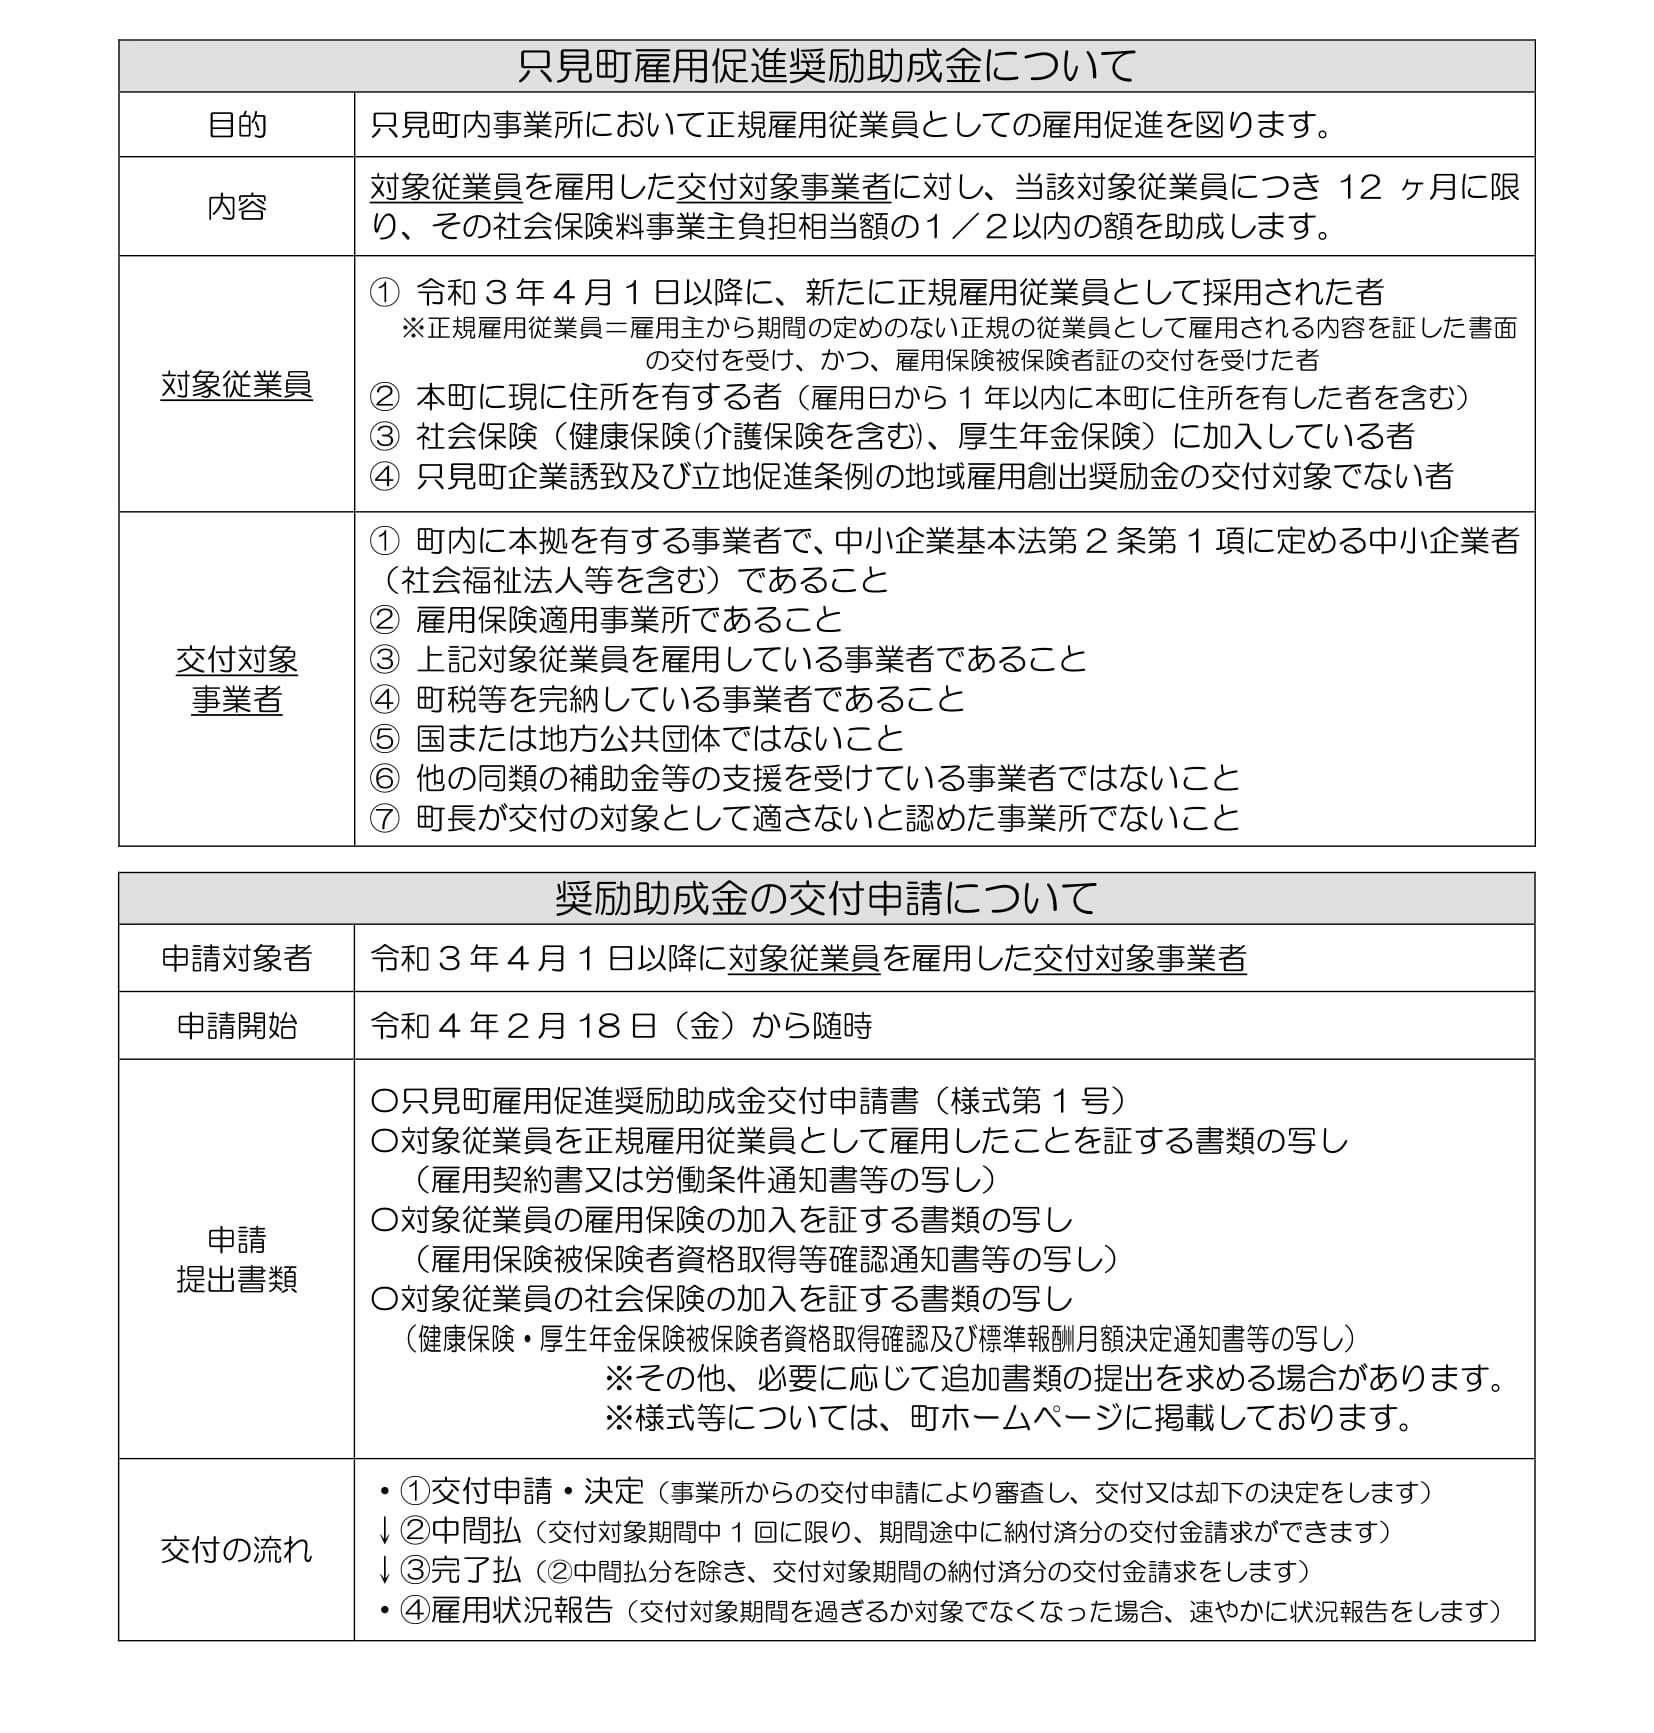 02.雇用促進奨励助成金チラシ２-1.jpg